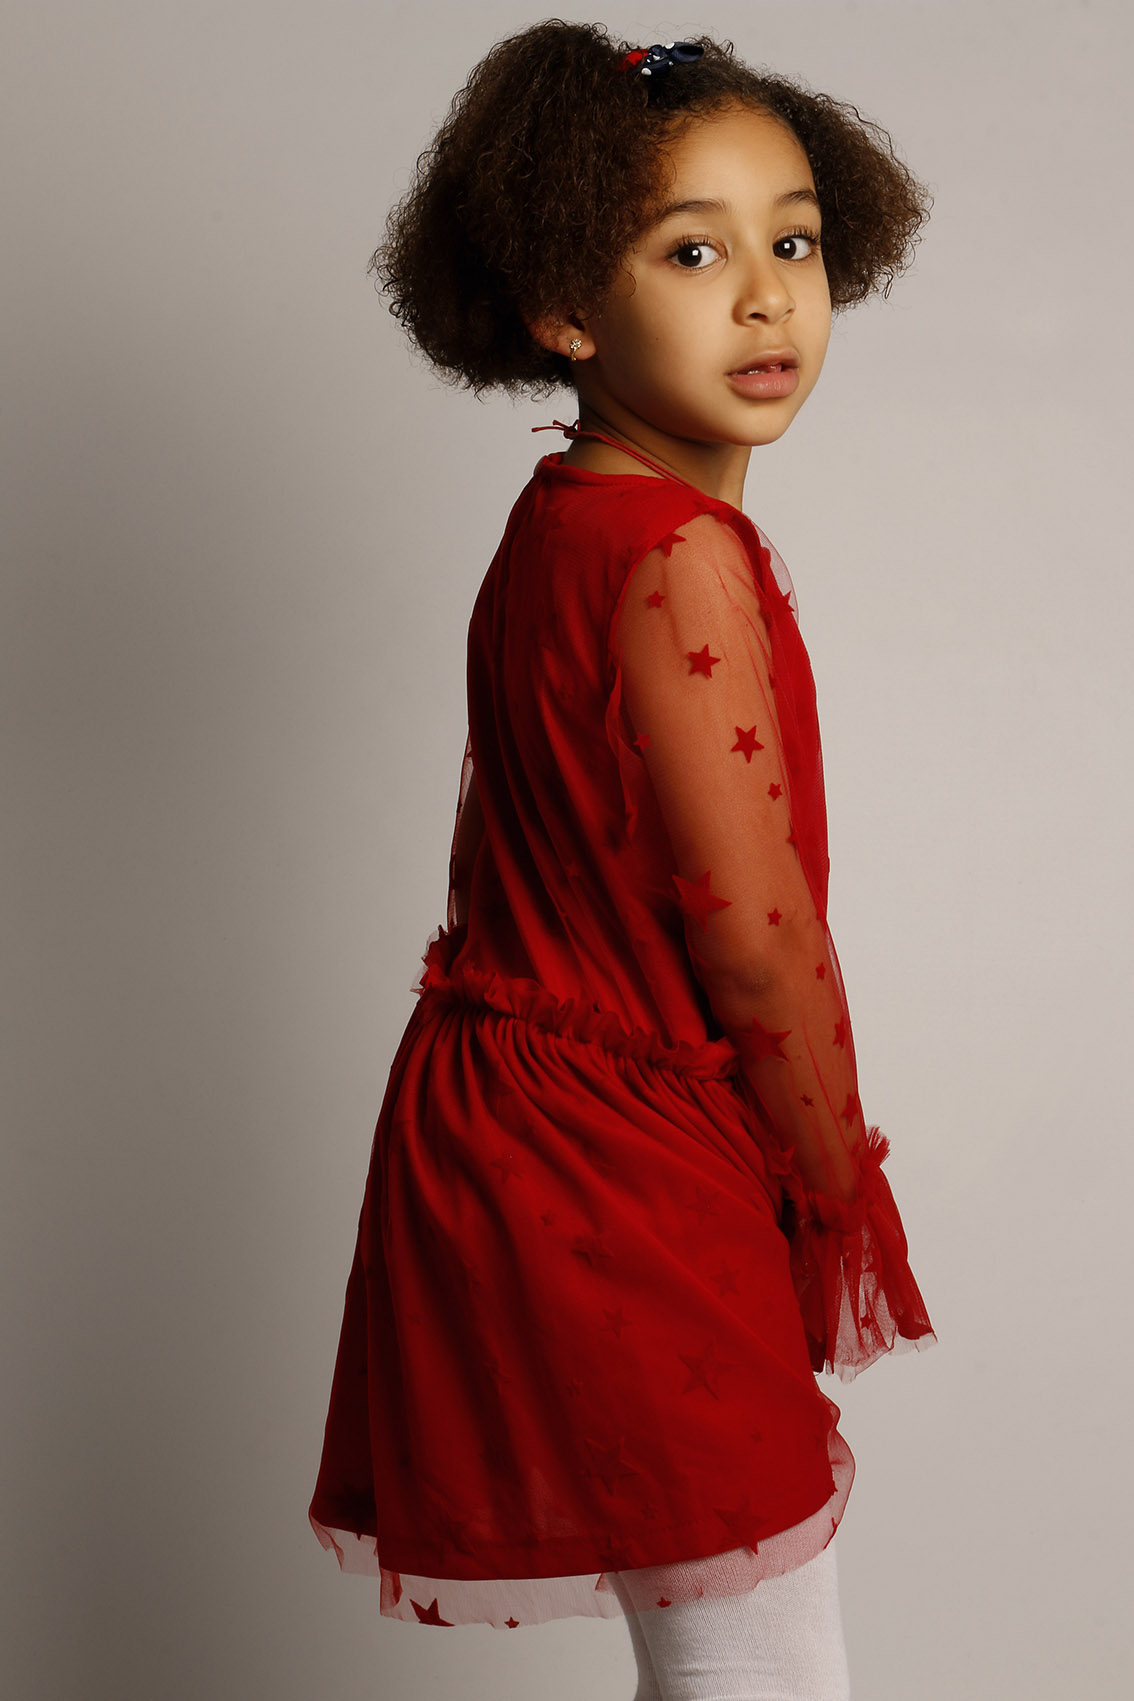 Nora Mririt Ait Bousseta modelo infantil Broadway Model Kids